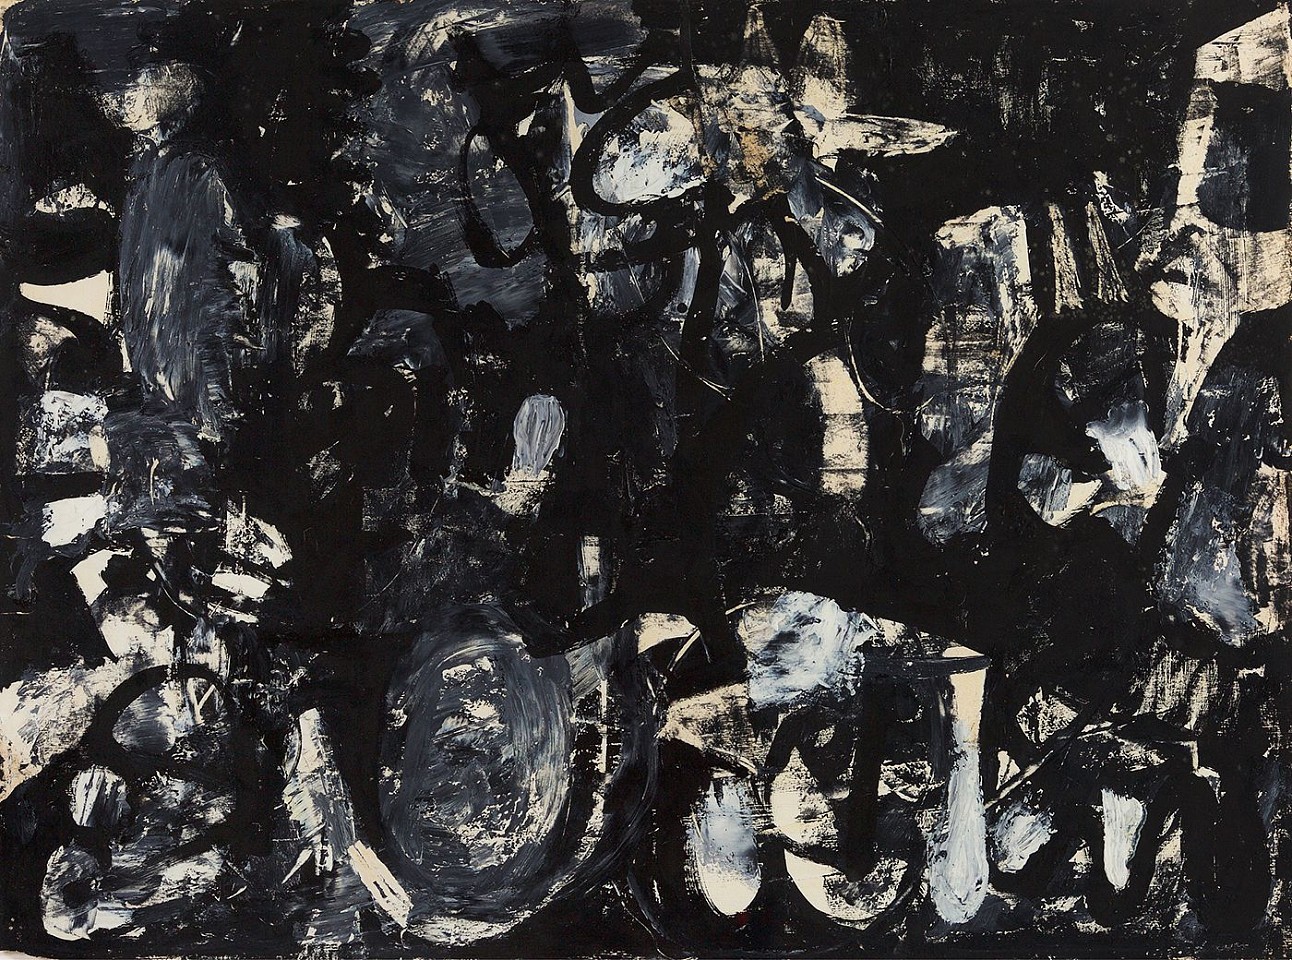 Charlotte Park, Untitled (50-49) | SOLD, c. 1955
Gouache and oil on paper, 18 x 24 in. (45.7 x 61 cm)
PAR-00106